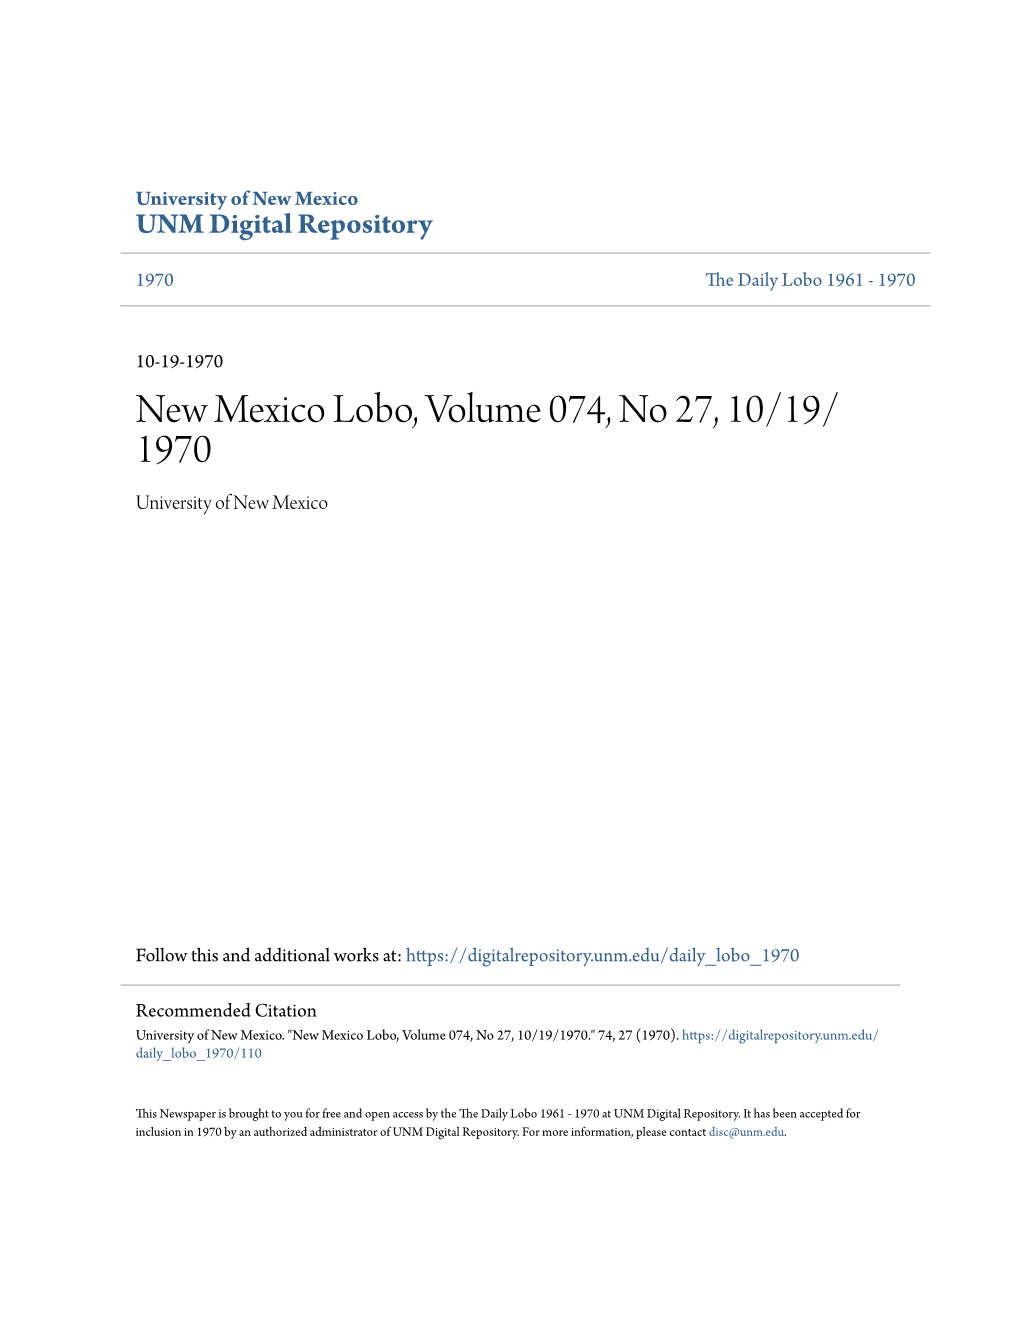 New Mexico Lobo, Volume 074, No 27, 10/19/1970." 74, 27 (1970)